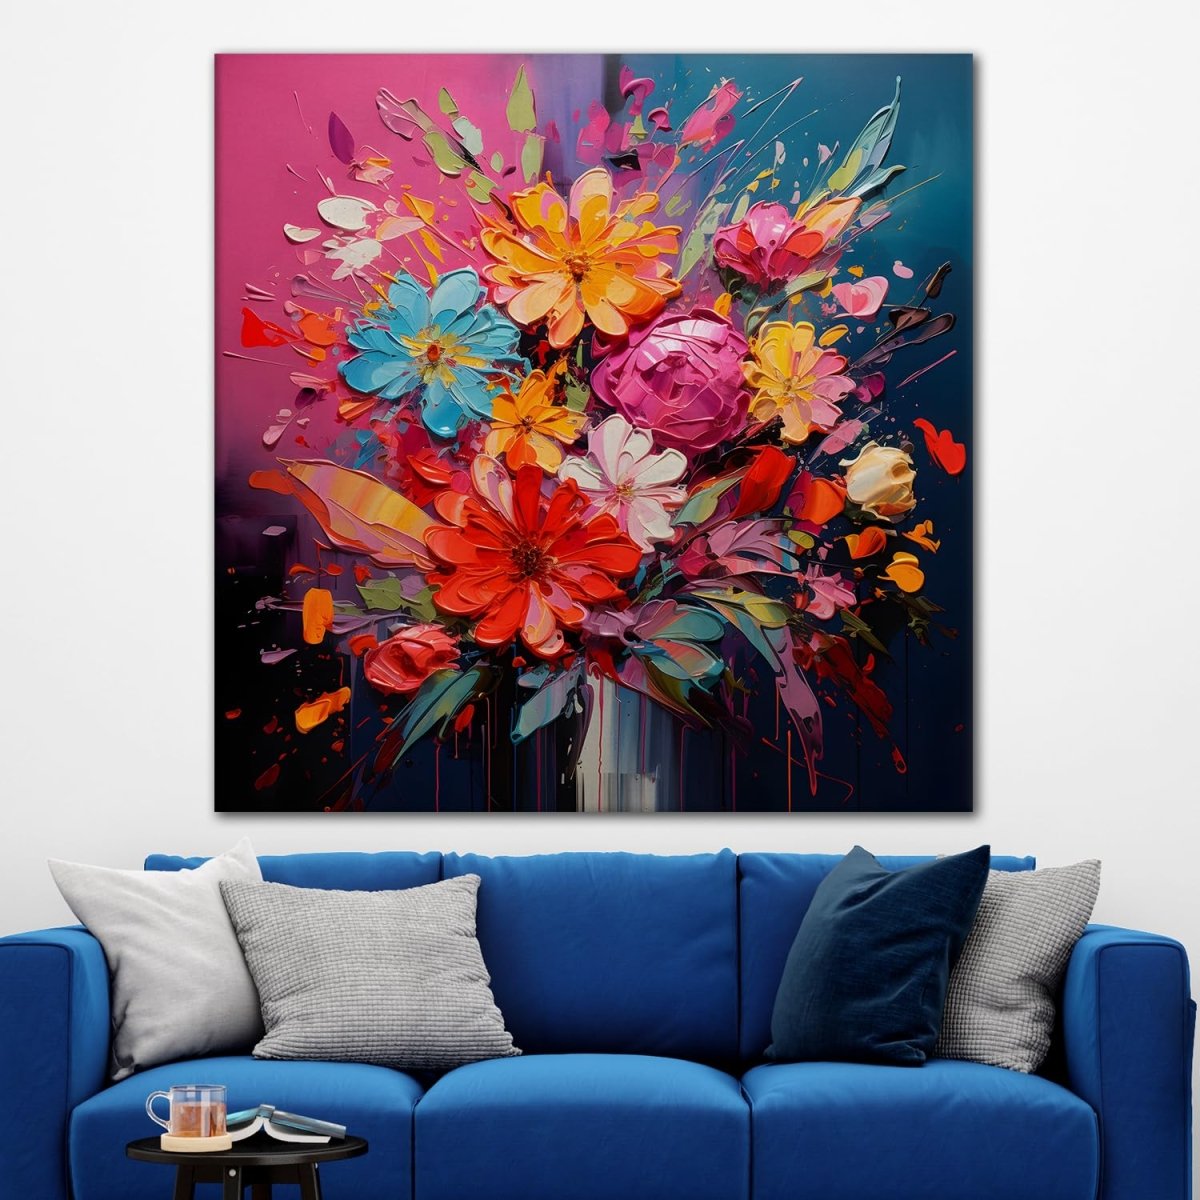 Interwoven Dreams Floral Canvas Wall Art (36 x 36 Inches)